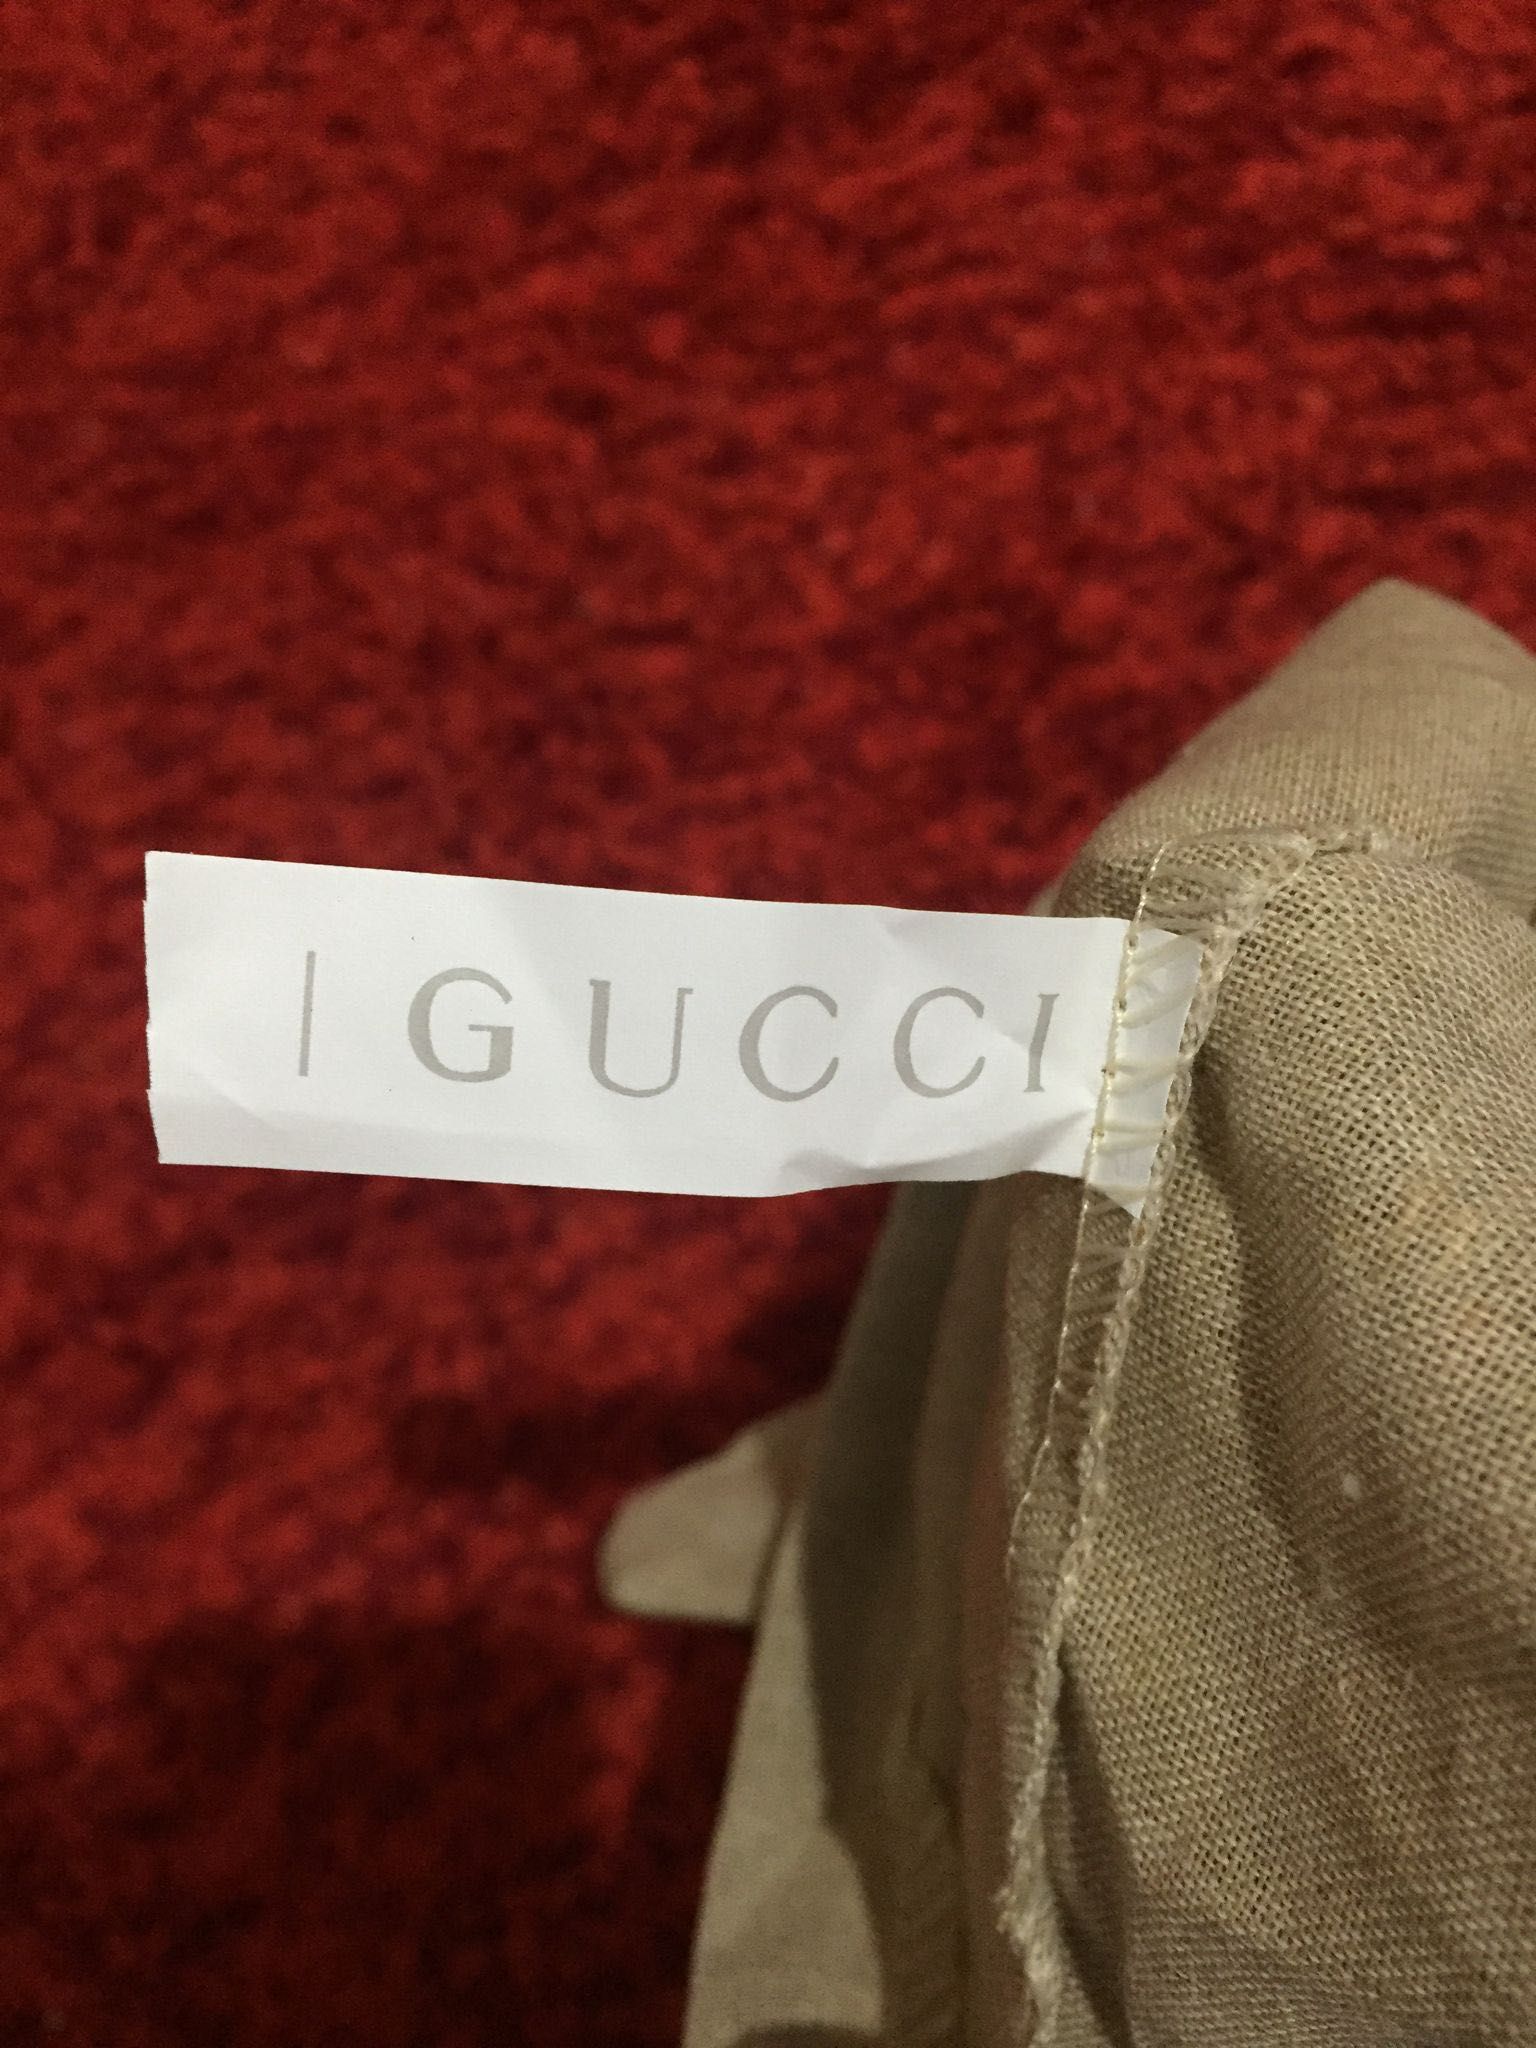 Saculet Gucci dust bag cutie punga sacosa cutii LV